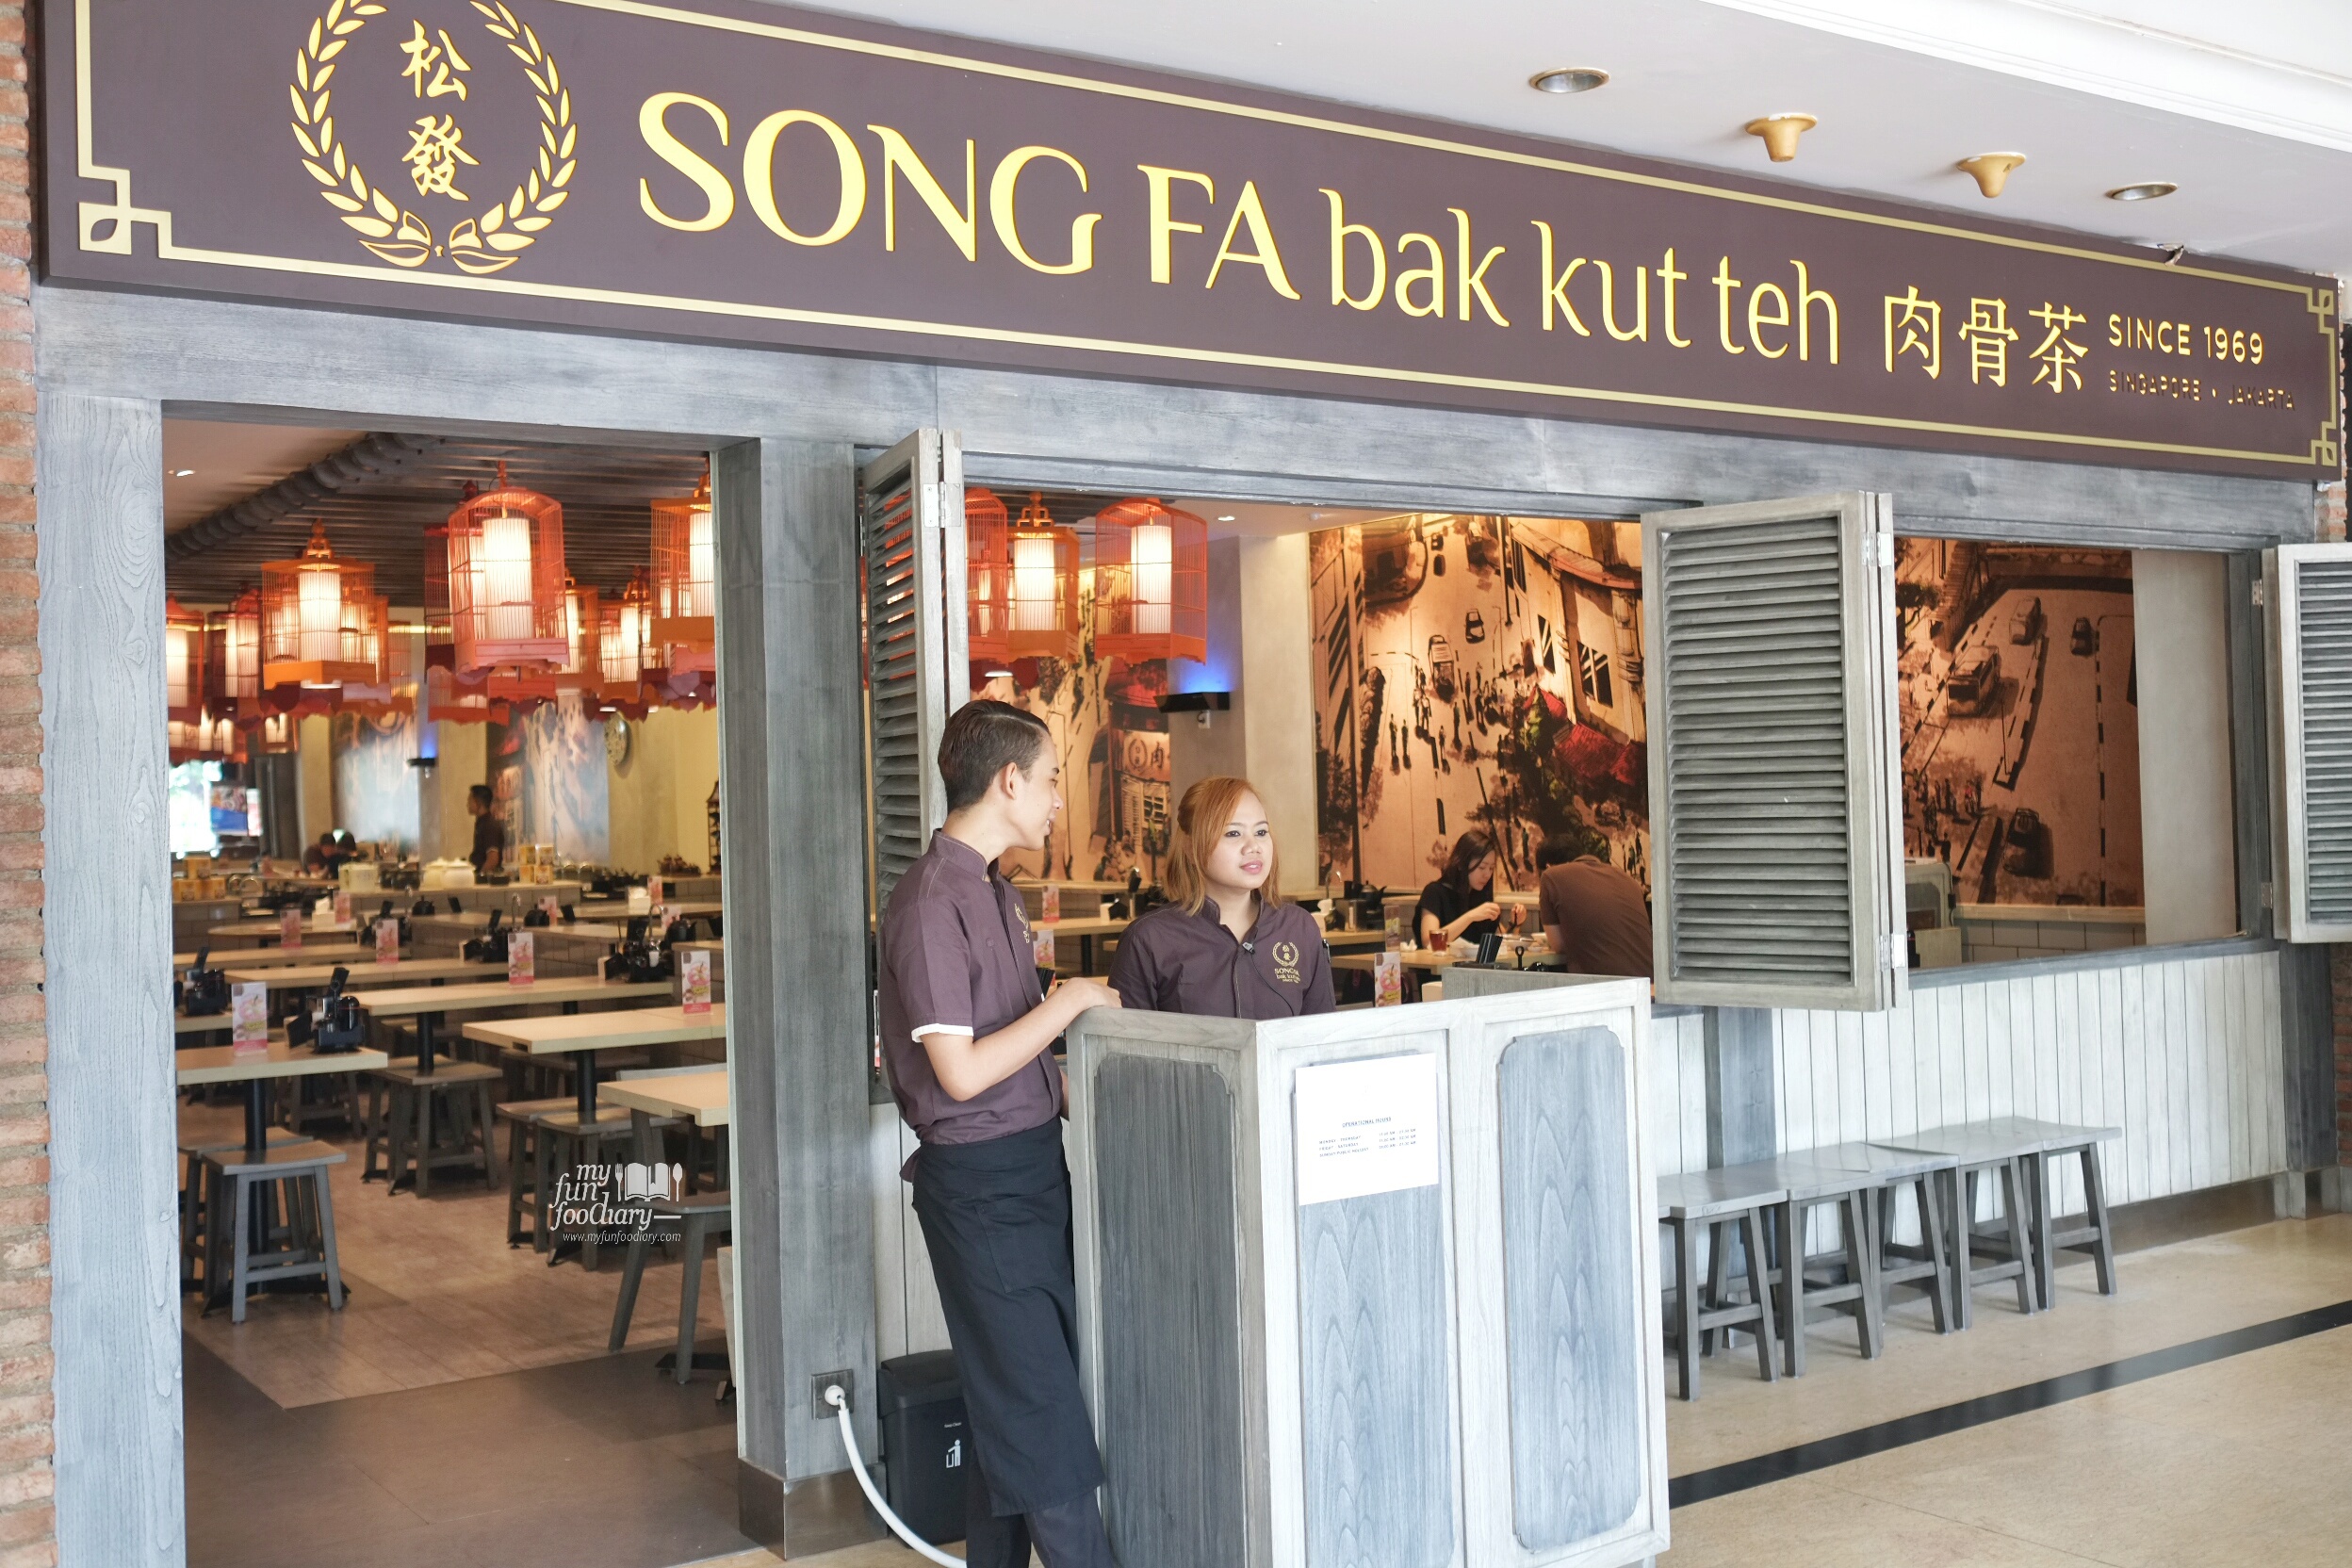 Tampak Depan Song Fa Bak Kut Teh Jayakarta Food Place - by Myfunfoodiary